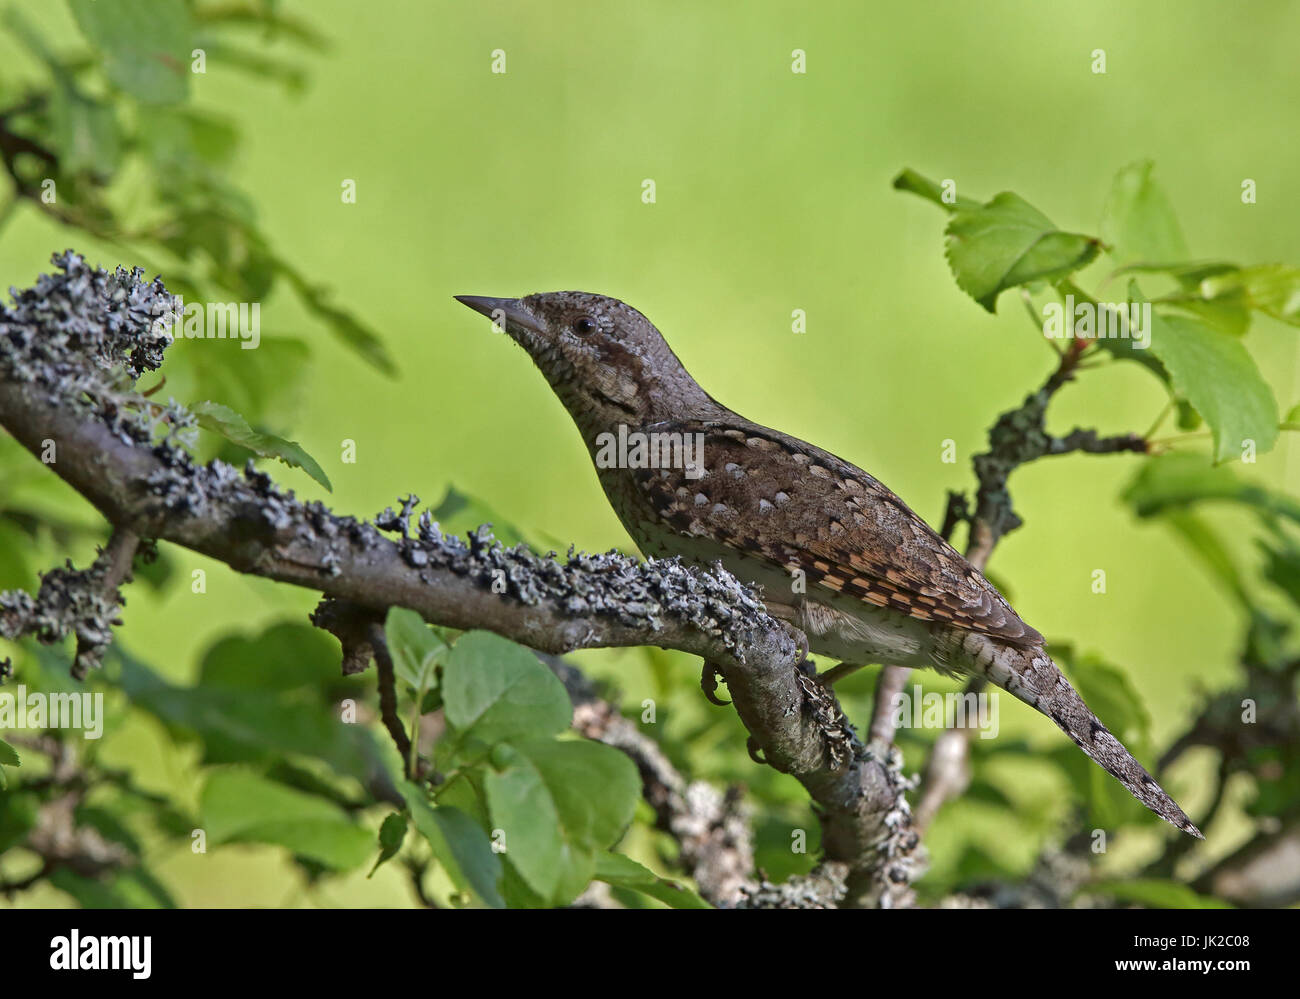 Eurasian wryneck, Jynx torquilla, sitting on branch, clean green background Stock Photo